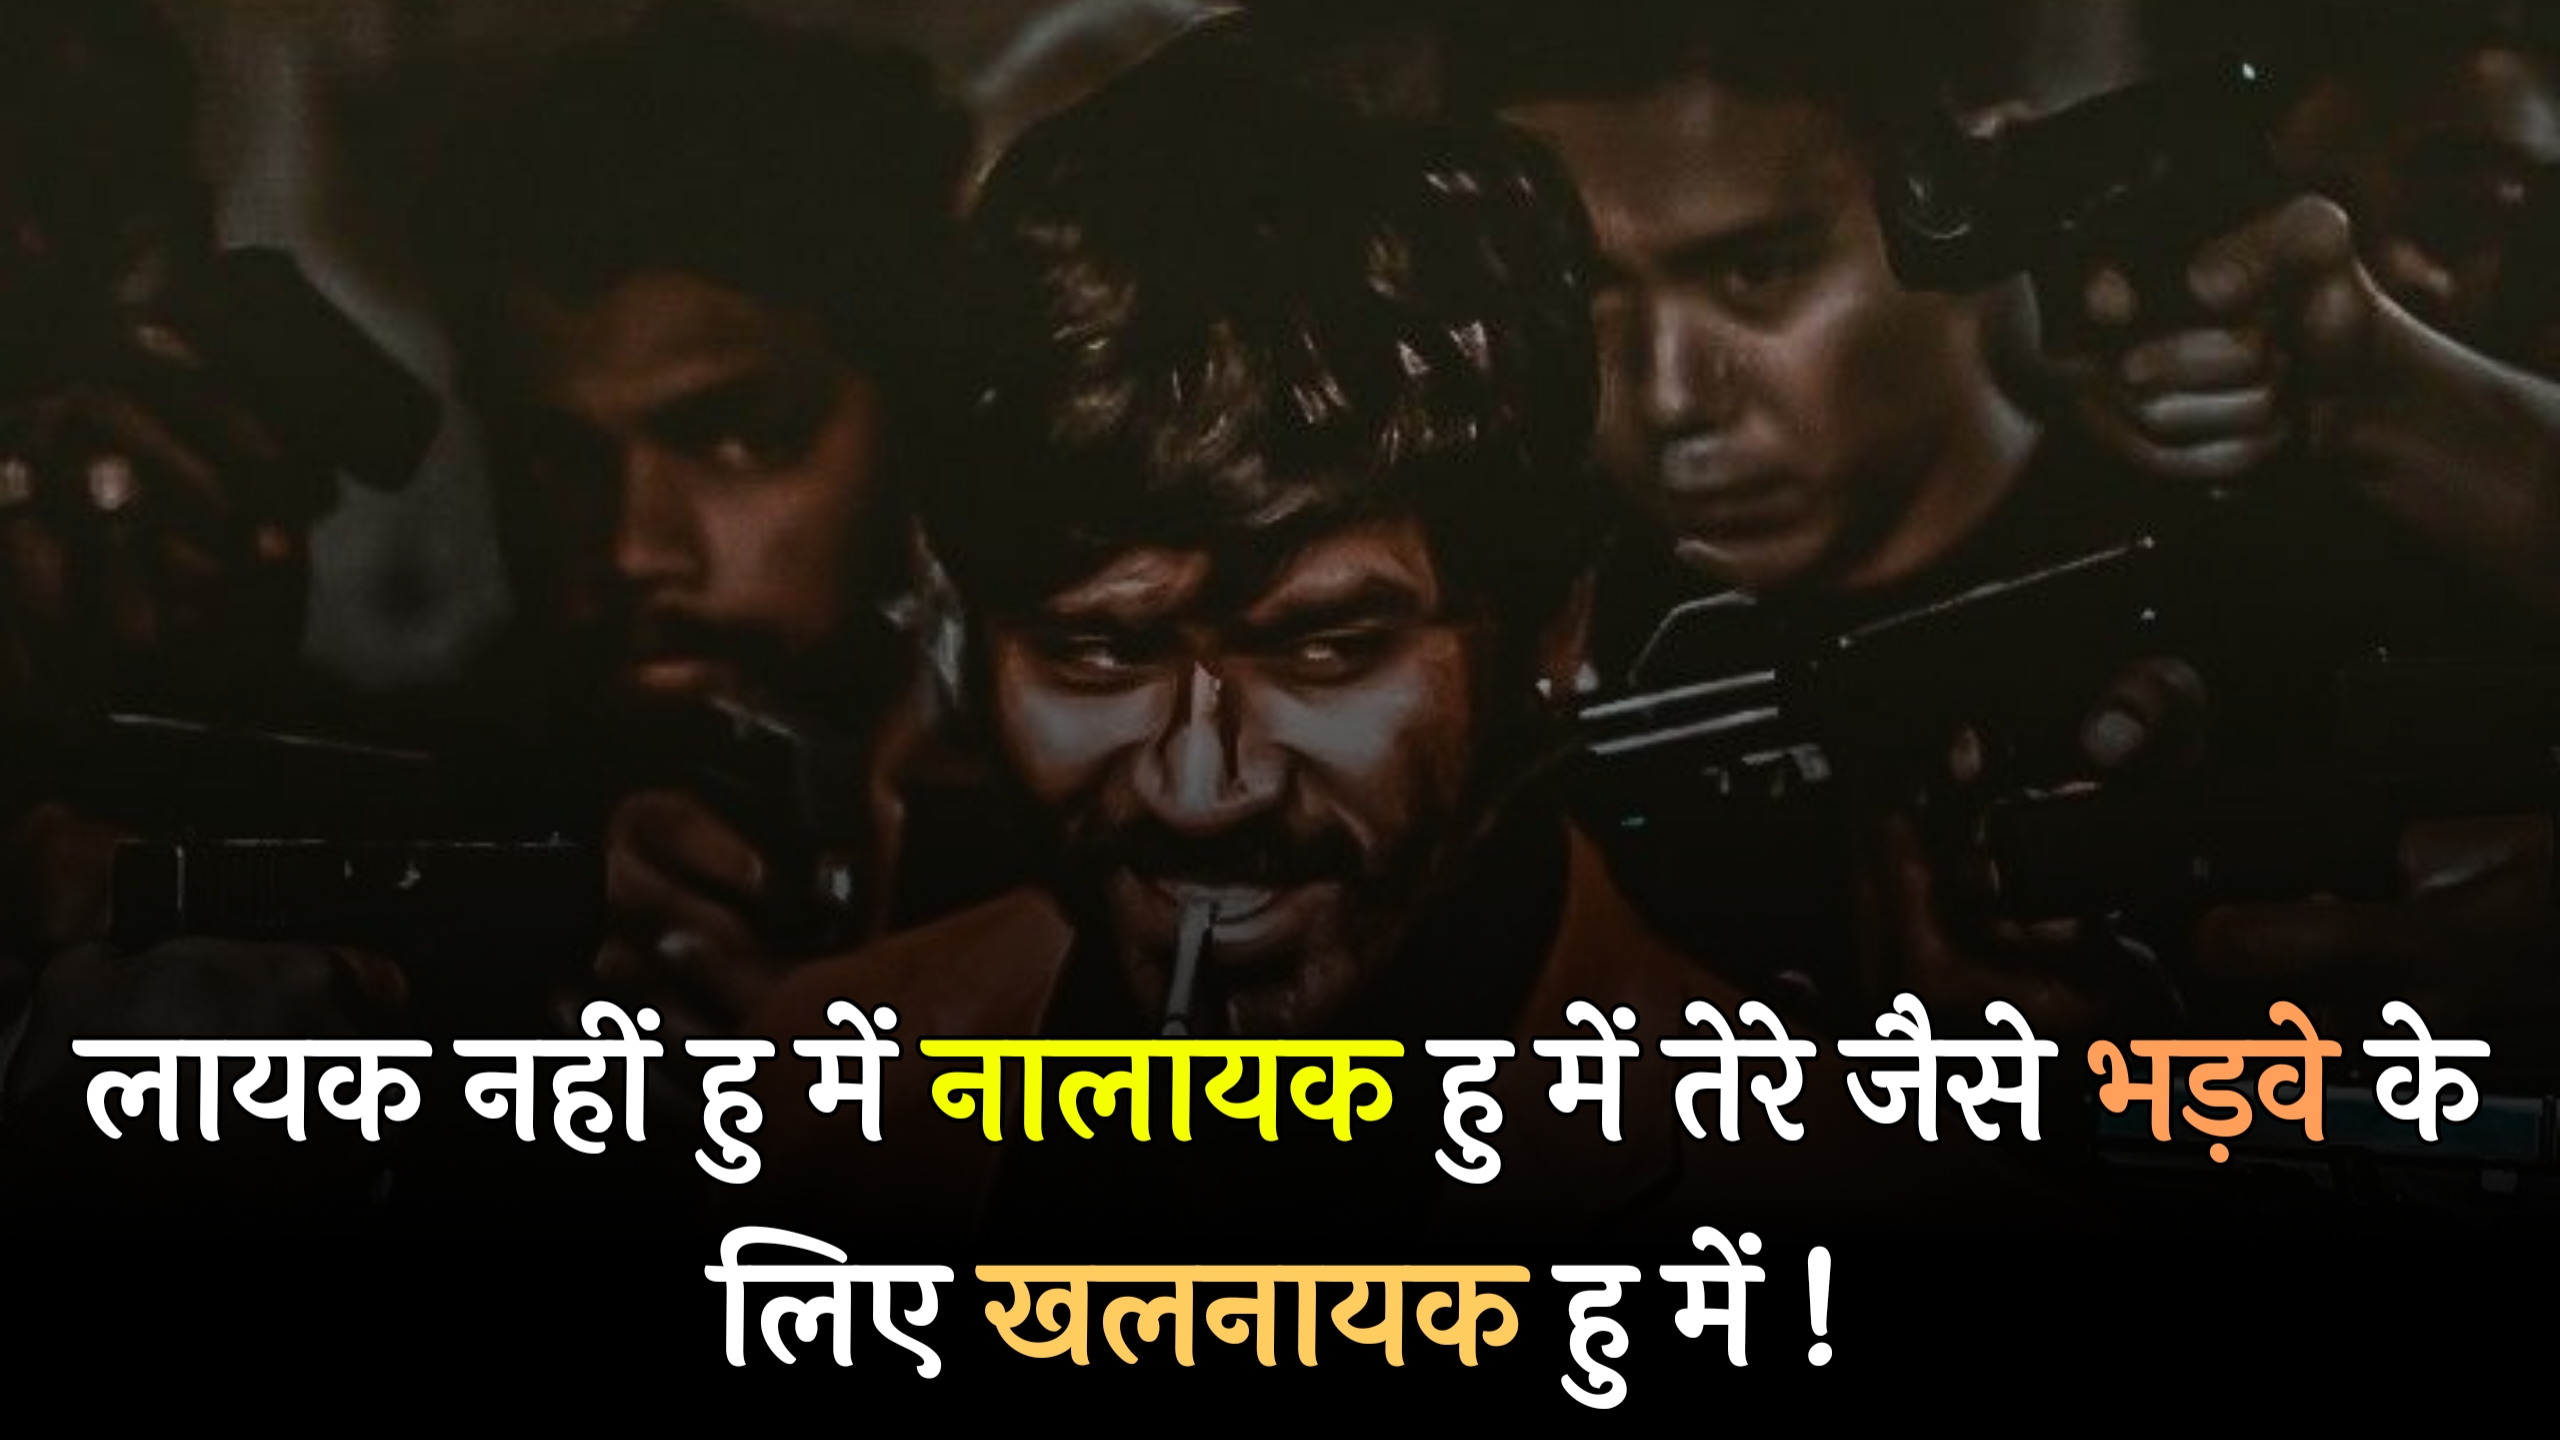 60 + Gangster shayari in Hindi | गैंगस्टर शायरी इन हिंदी,gangster shayari in hindi 2 line,gangster shayari,gangster shayari in english,gangster shayari hindi,gangster shayari 2 line